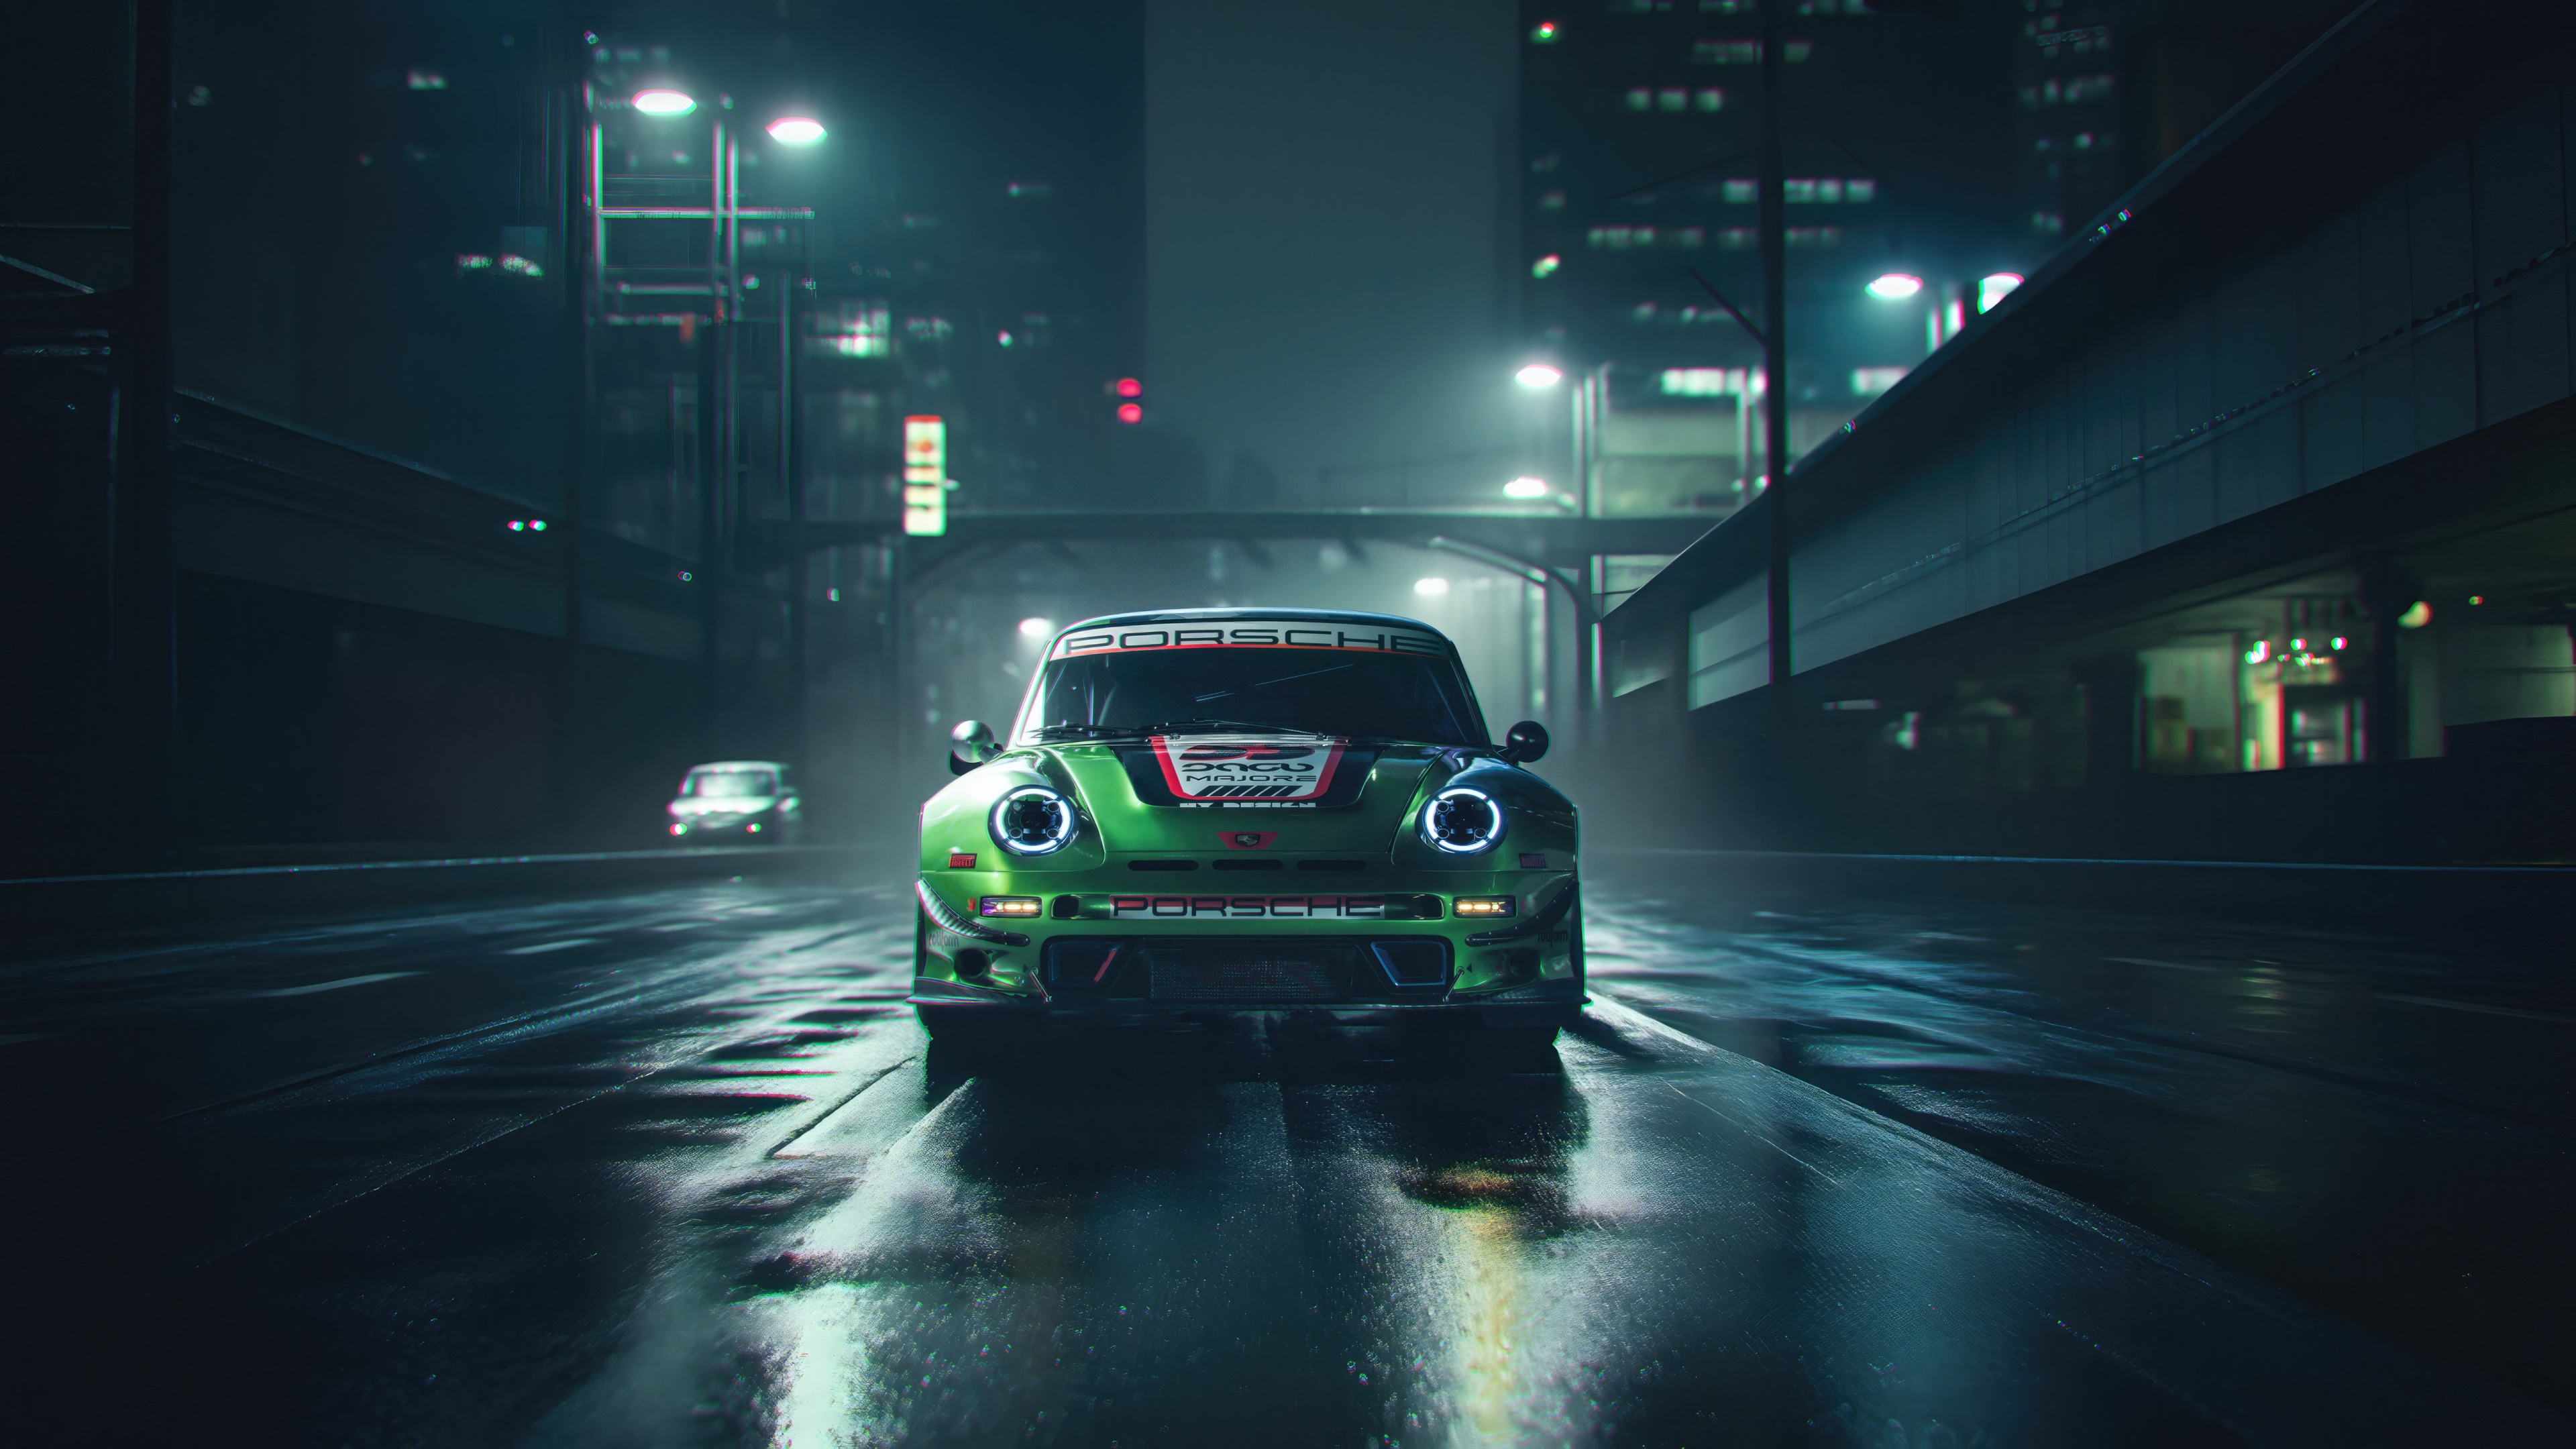 Porsche Neon Drive Cyberpunk Green In Glory 4k Wallpaper 4K